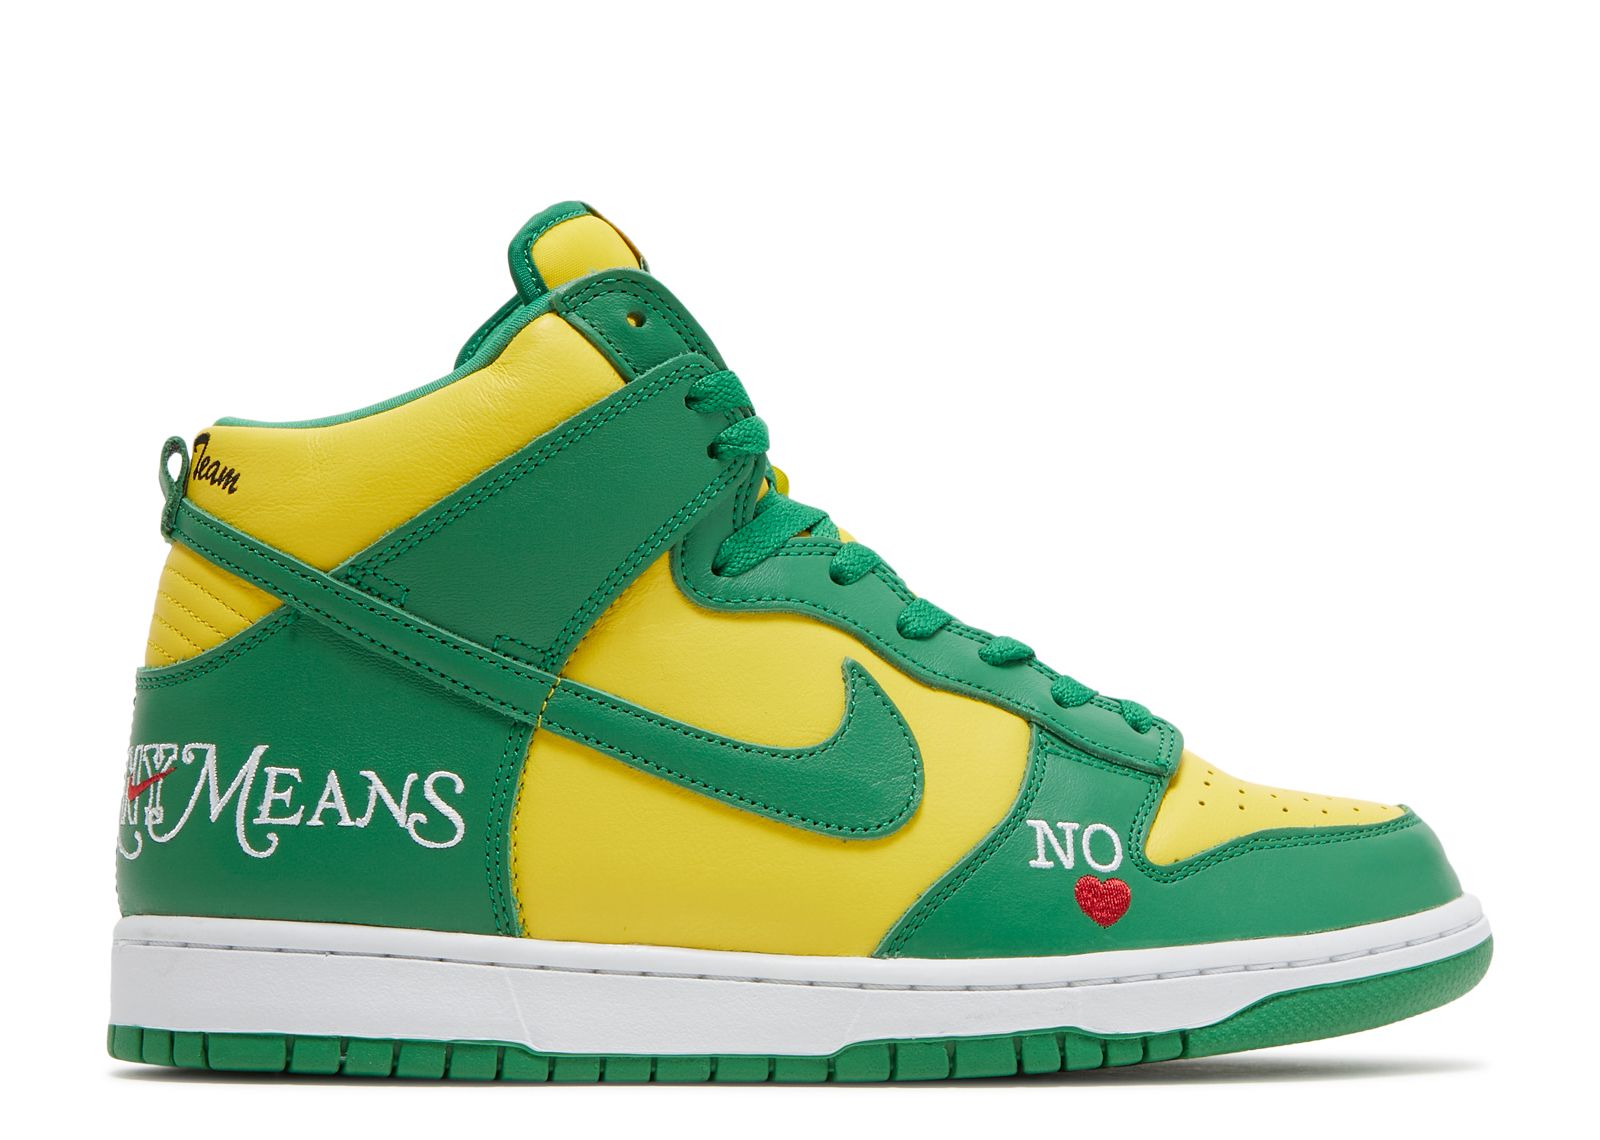 Nike Dunk High Yellow/Green/White Shoes sz. 9 317982-731 Brasil/Sonics